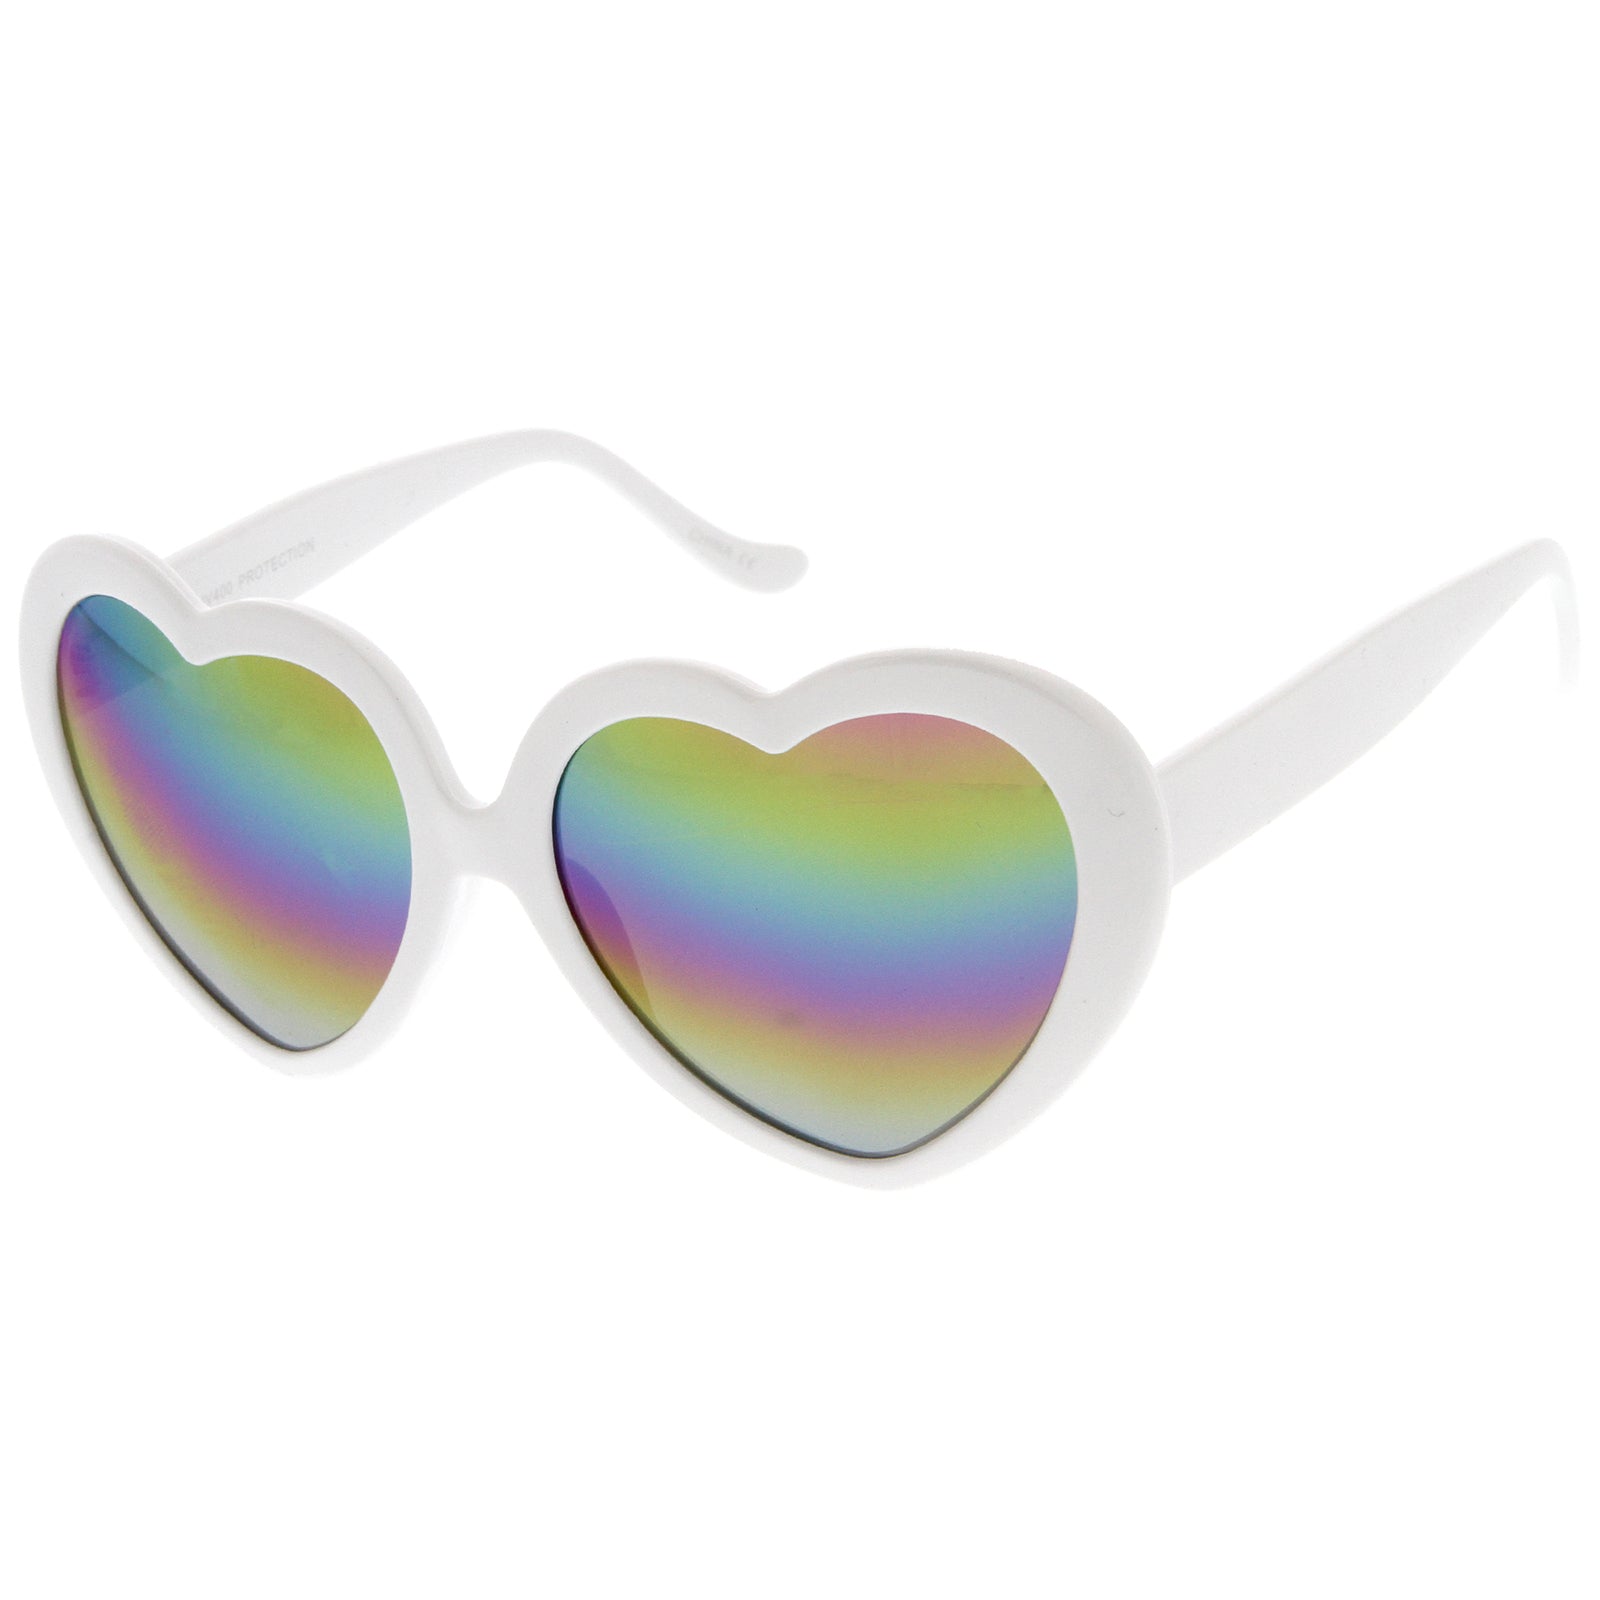 Vintage Style Hexagonal Mirrored Sunglasses in Rainbow. - Etsy